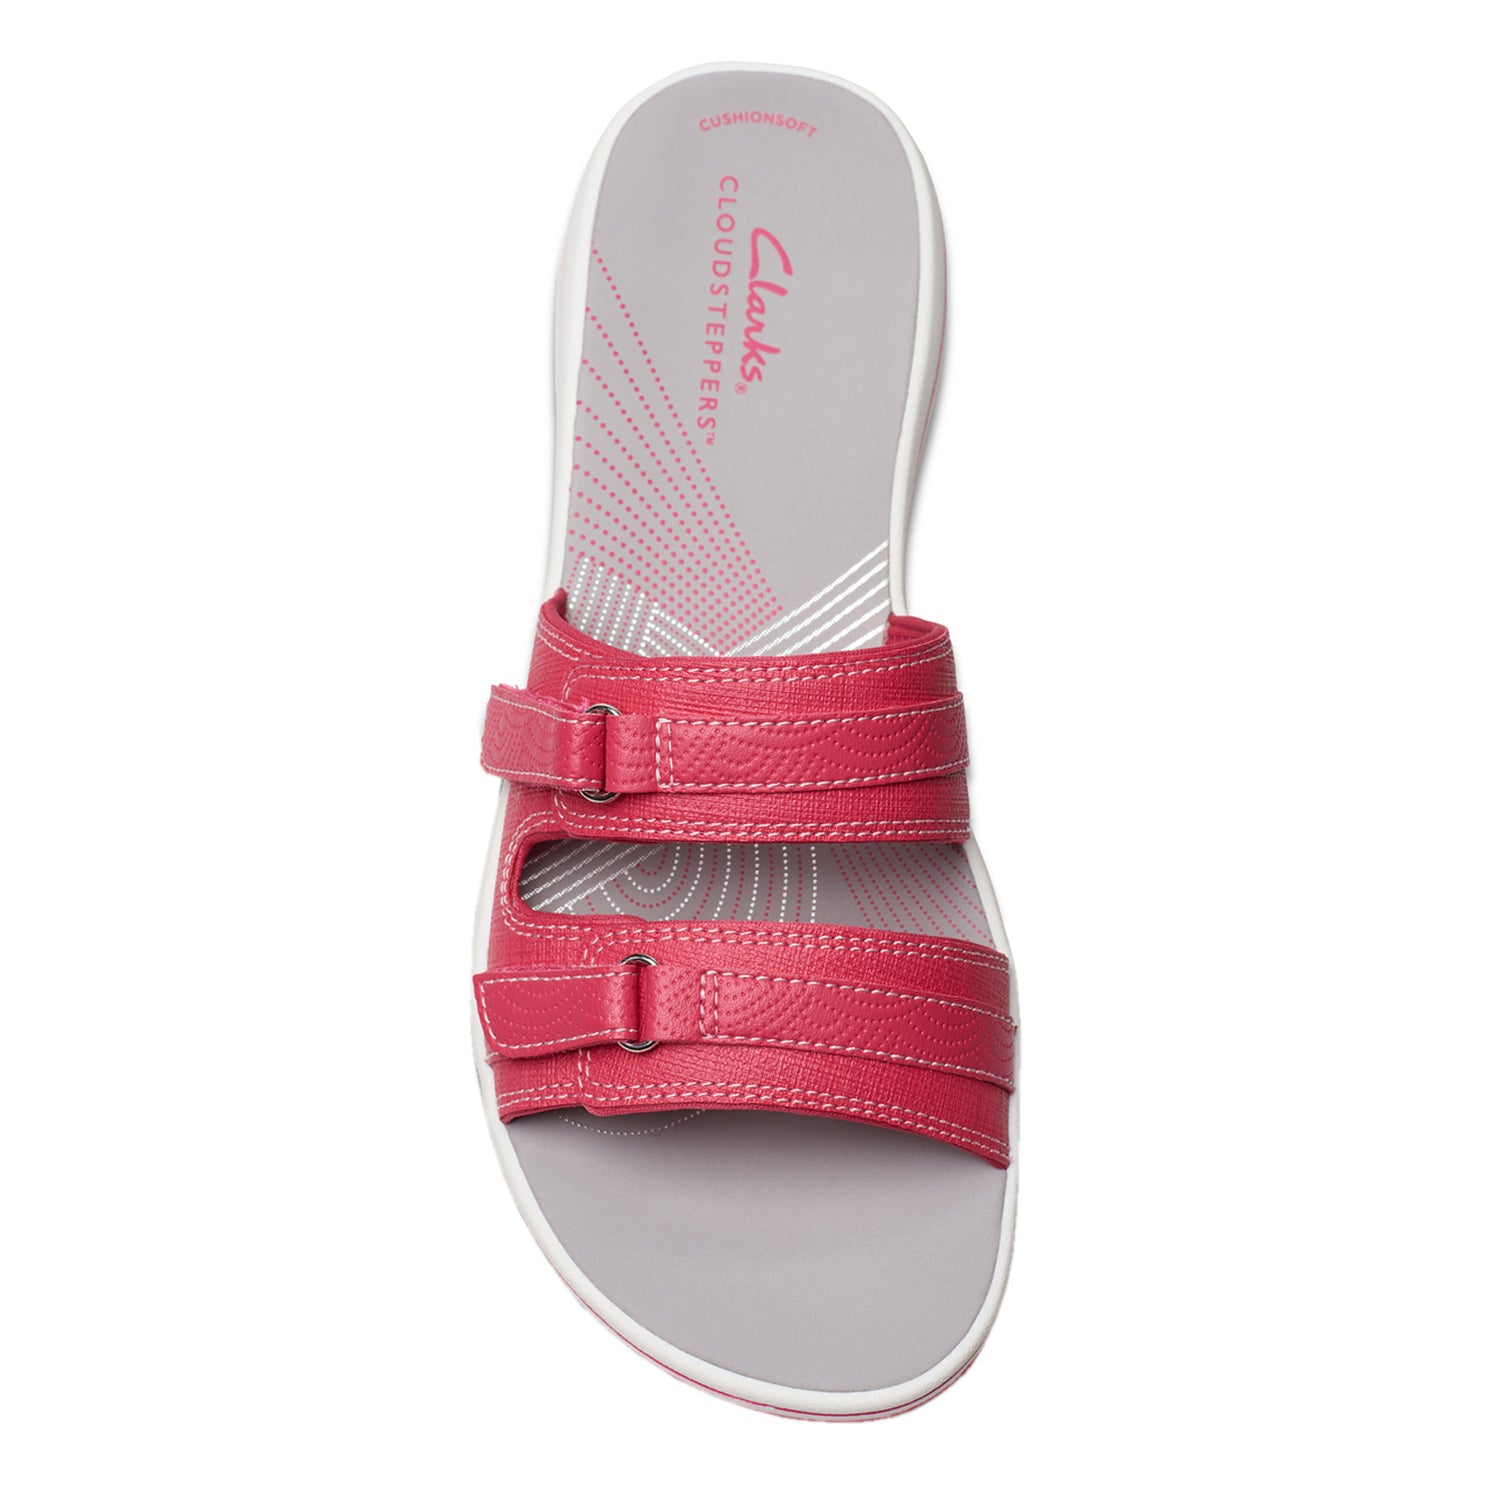 Peltz Shoes  Women's Clarks Breeze Piper Sandal Bright Pink Combi 26177217